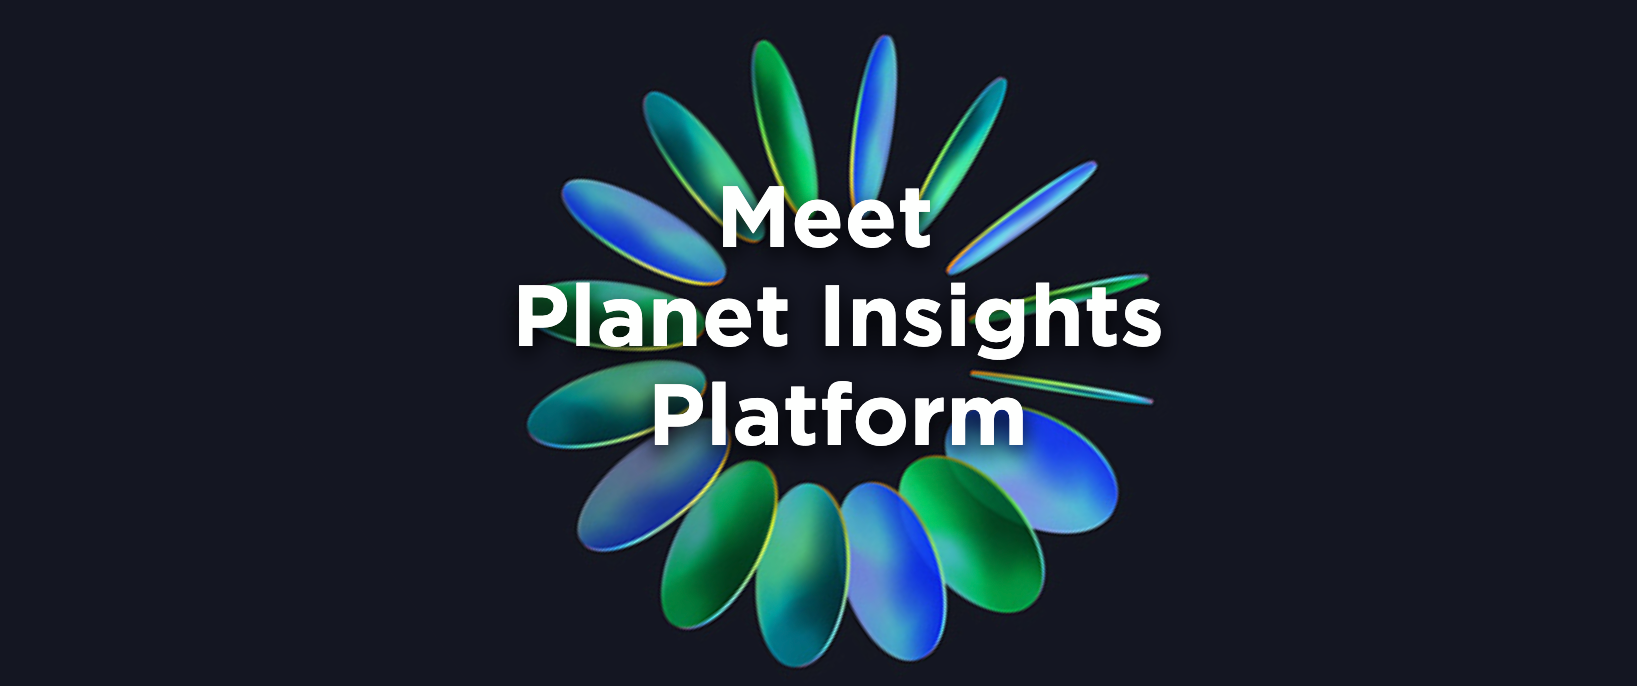 Say Hello To Planet Insights Platform